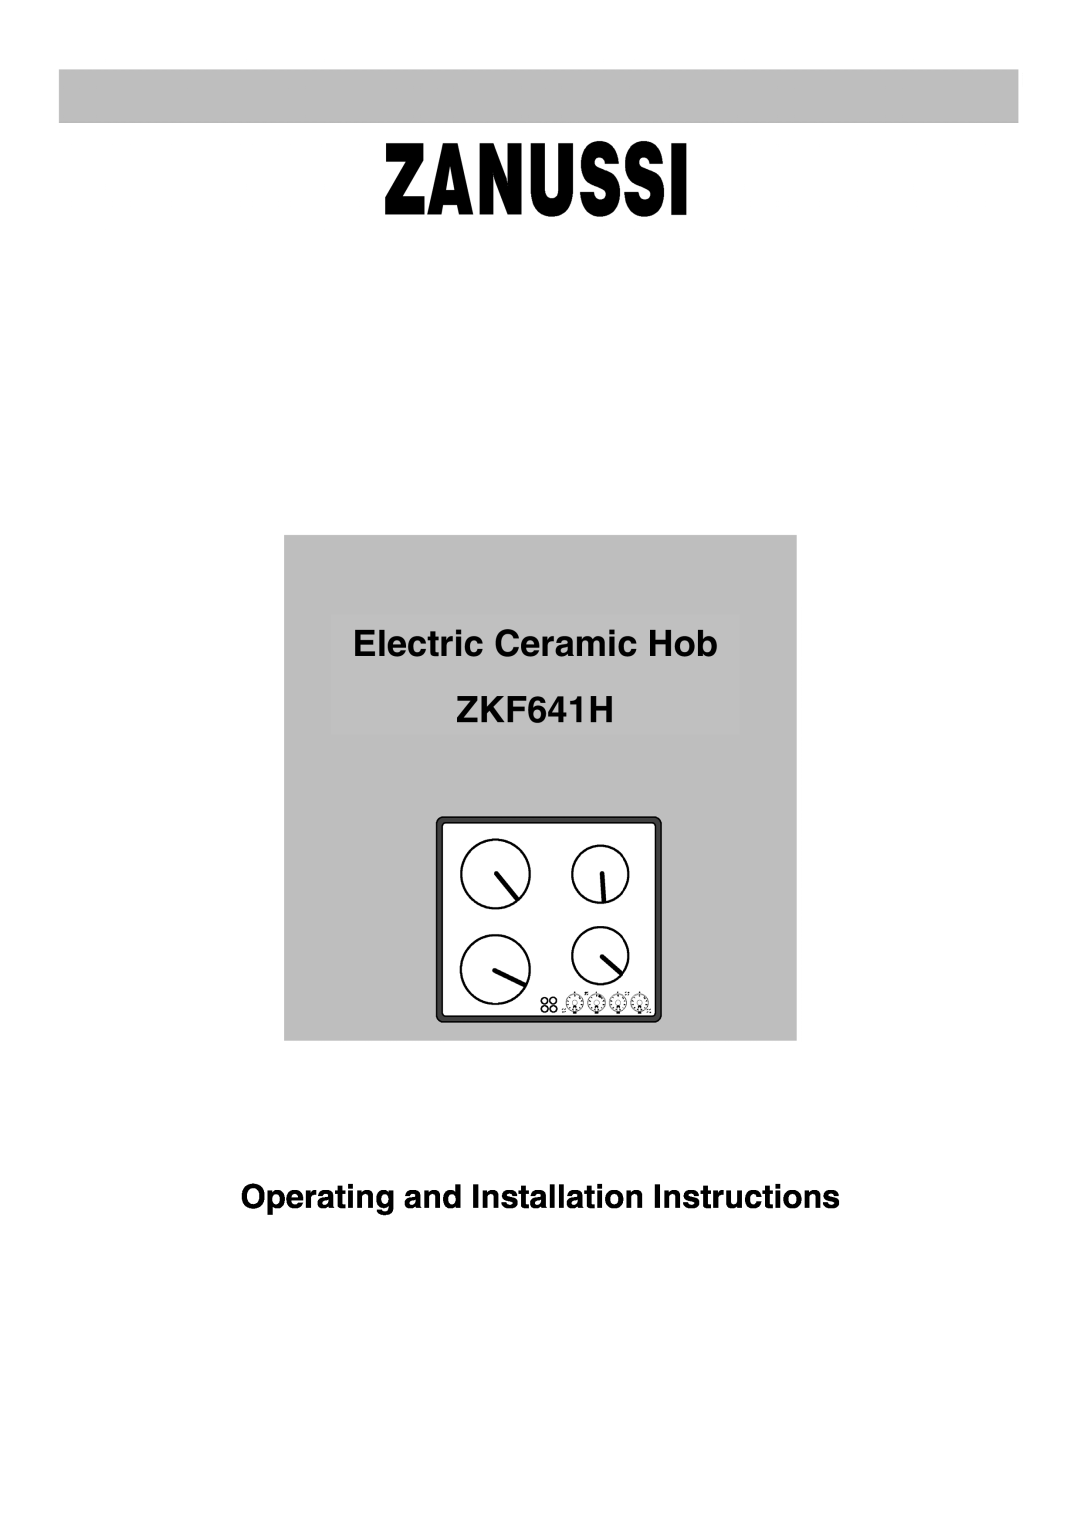 Zanussi manual Electric Ceramic Hob ZKF641H, Operating and Installation Instructions 